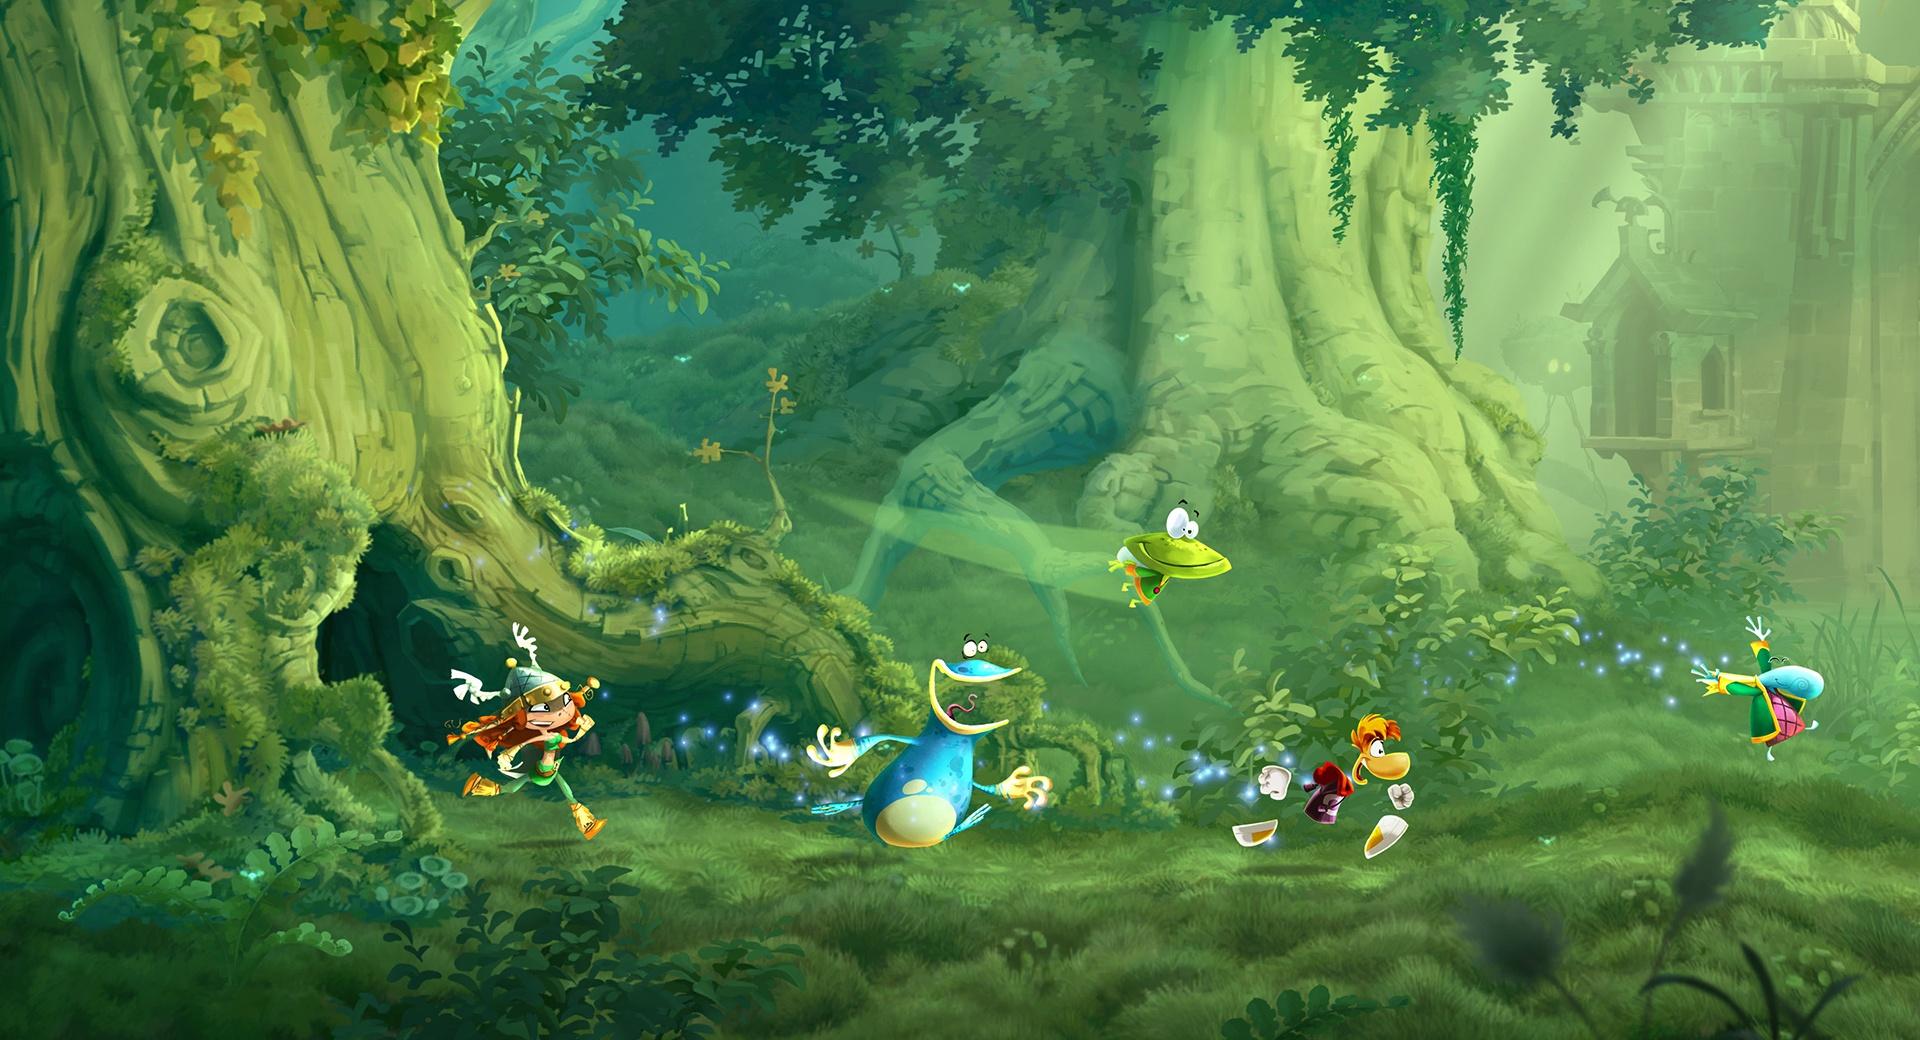 Rayman Legends Screenshots at 1600 x 1200 size wallpapers HD quality